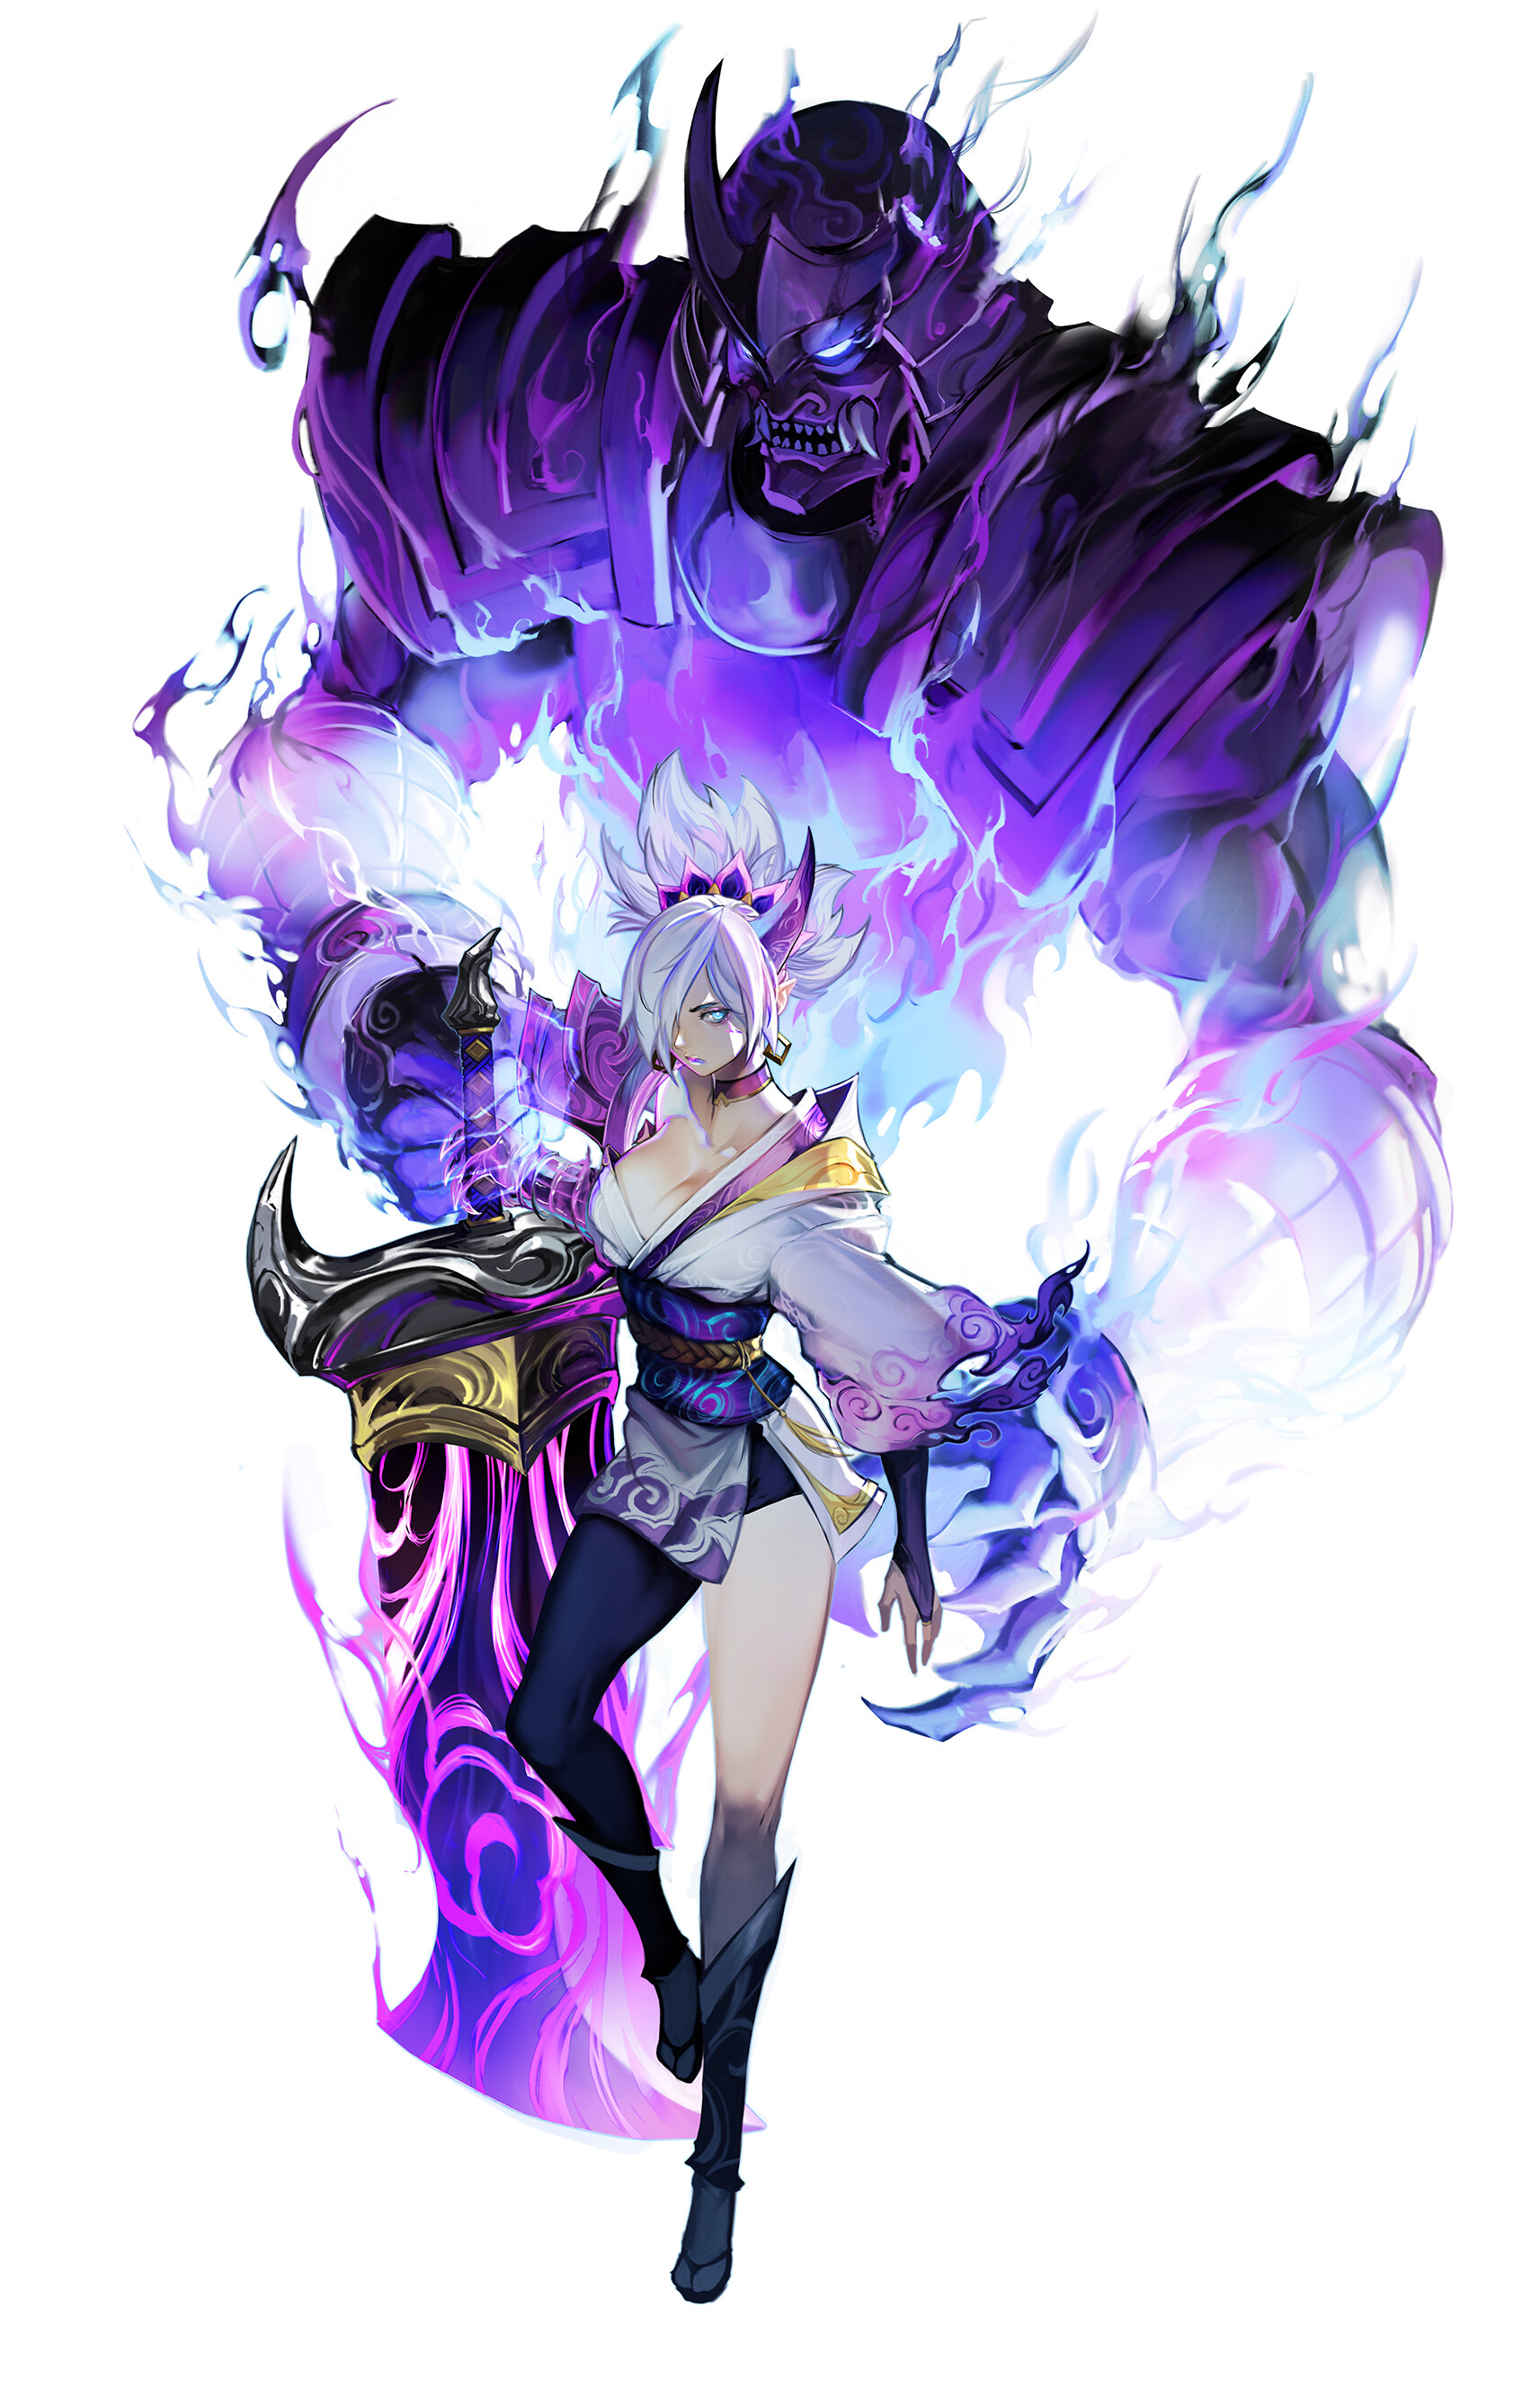 Anime 1713x2657 Riven (League of Legends) artwork simple background white background fantasy art BabyG Wong women fantasy girl